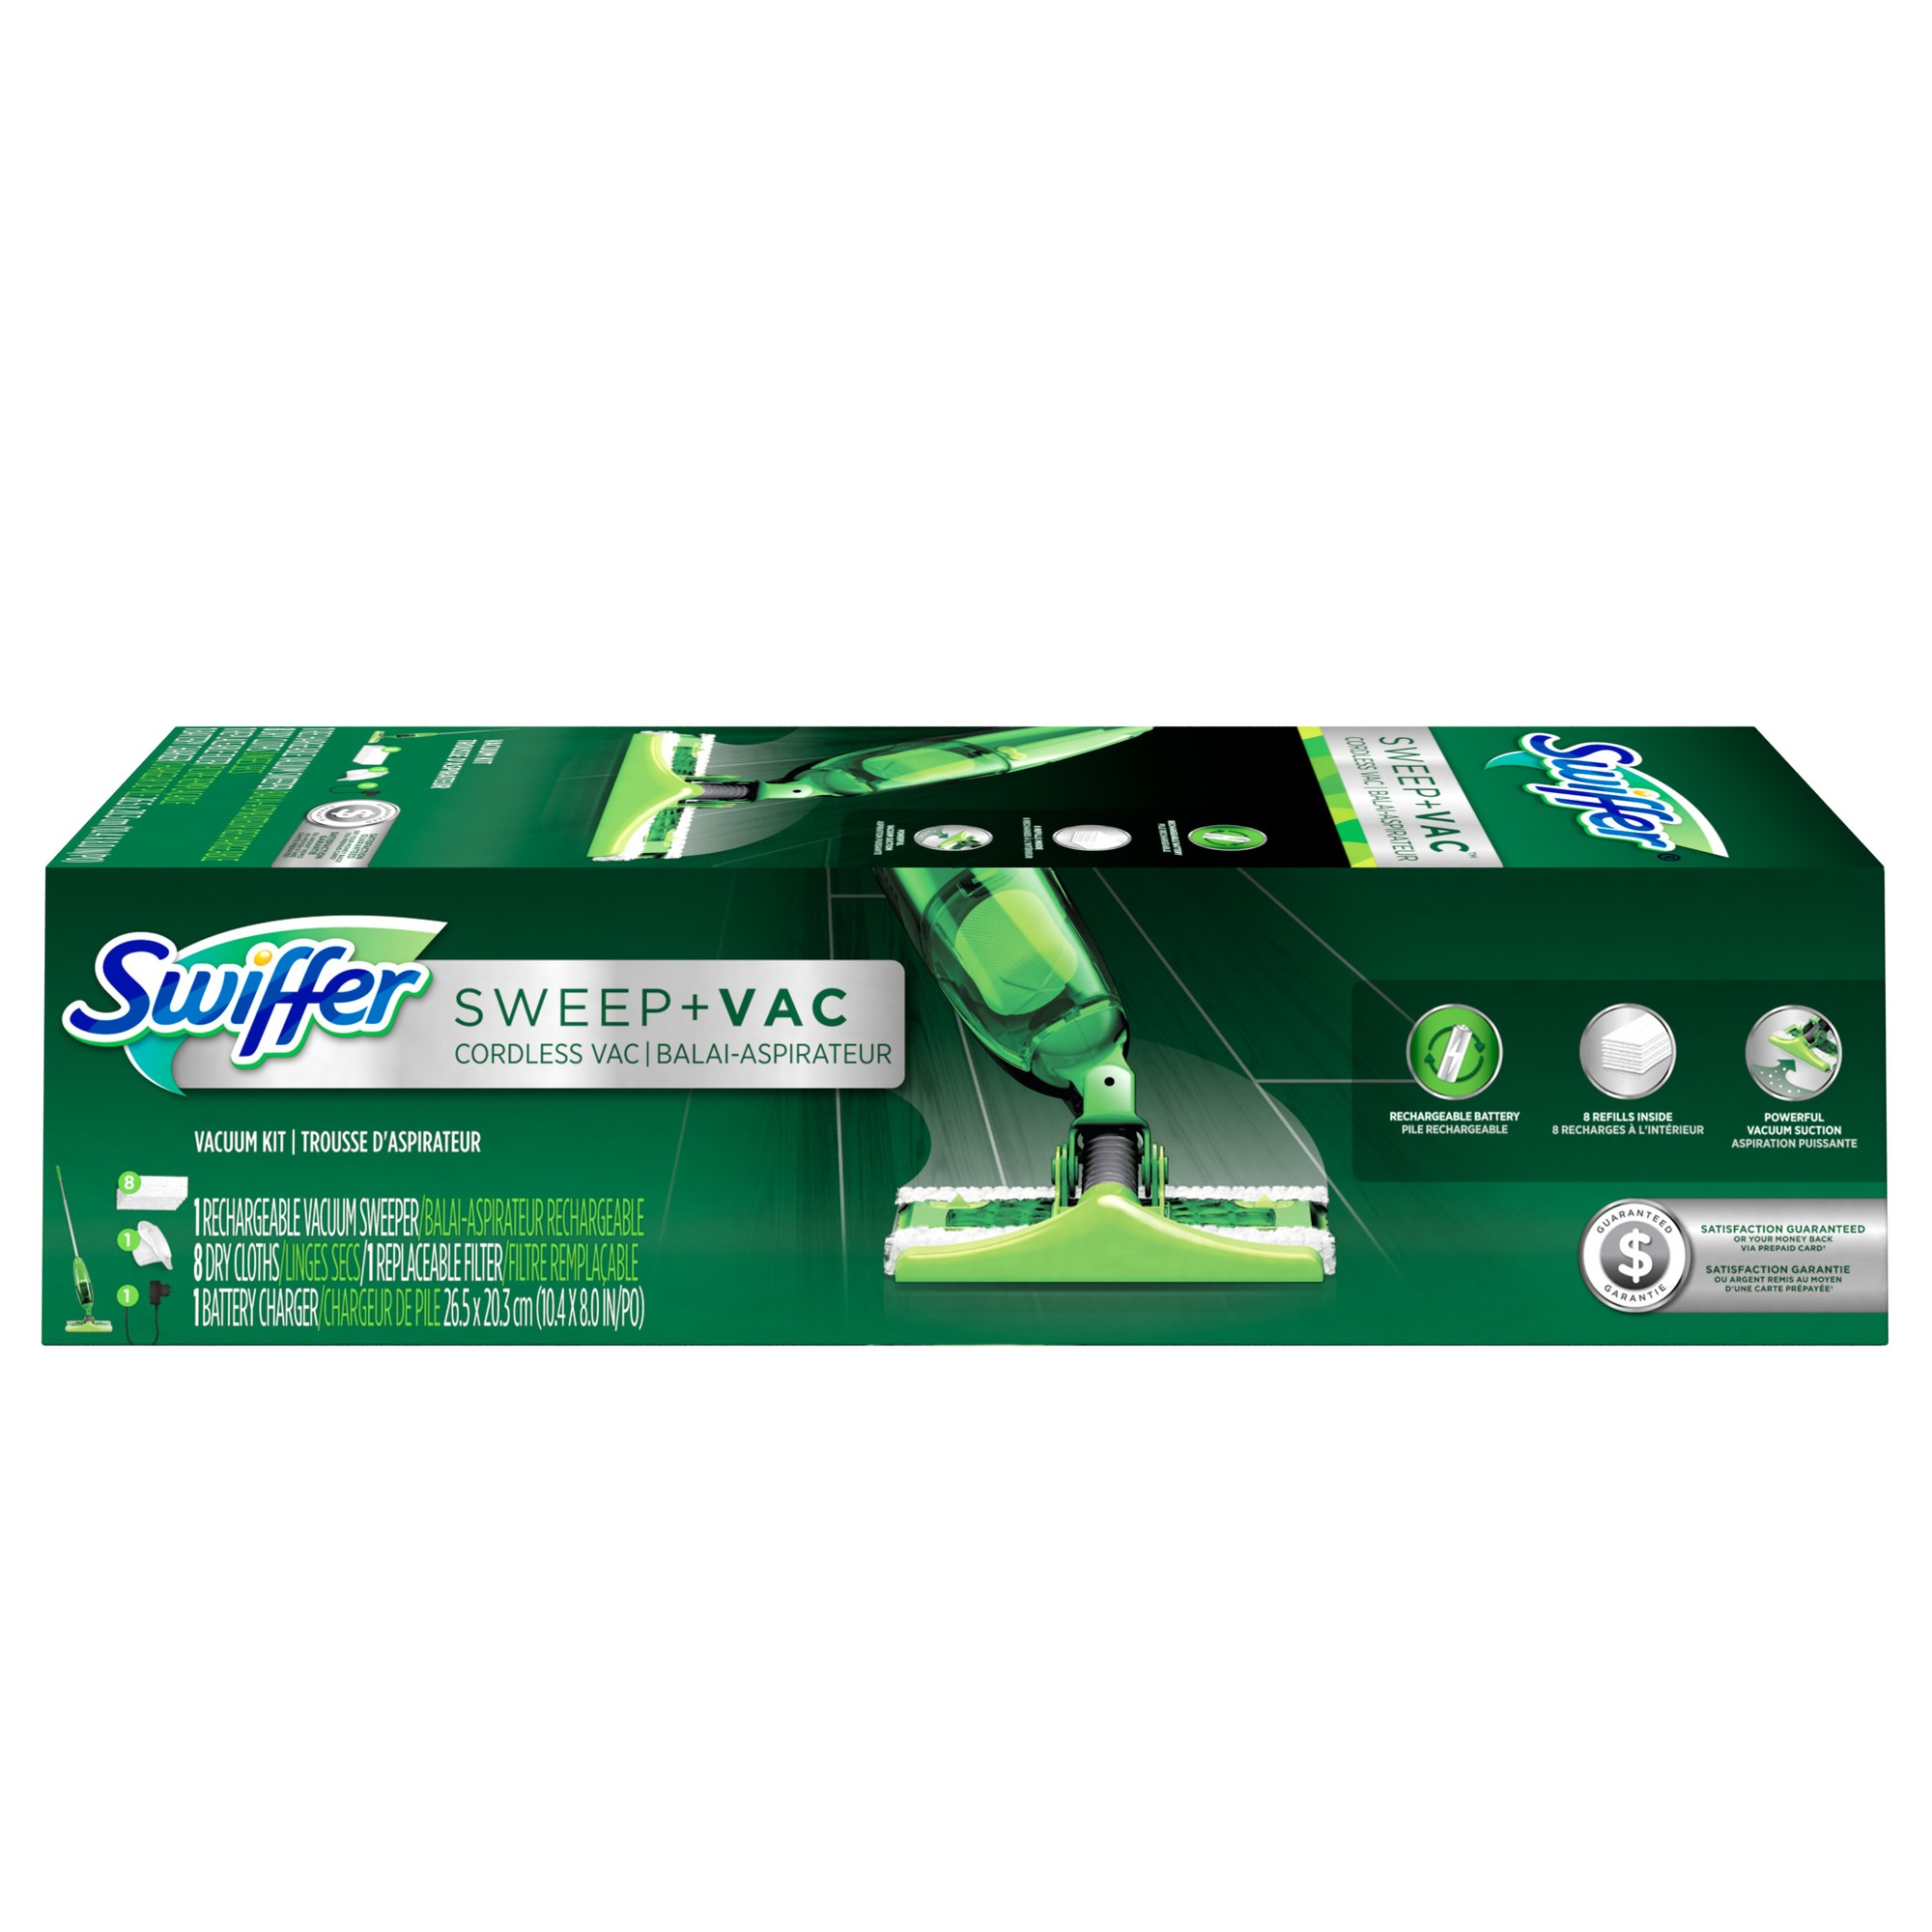 Sweeper + Vacuum Starter Kit, 8 Dry Cloths